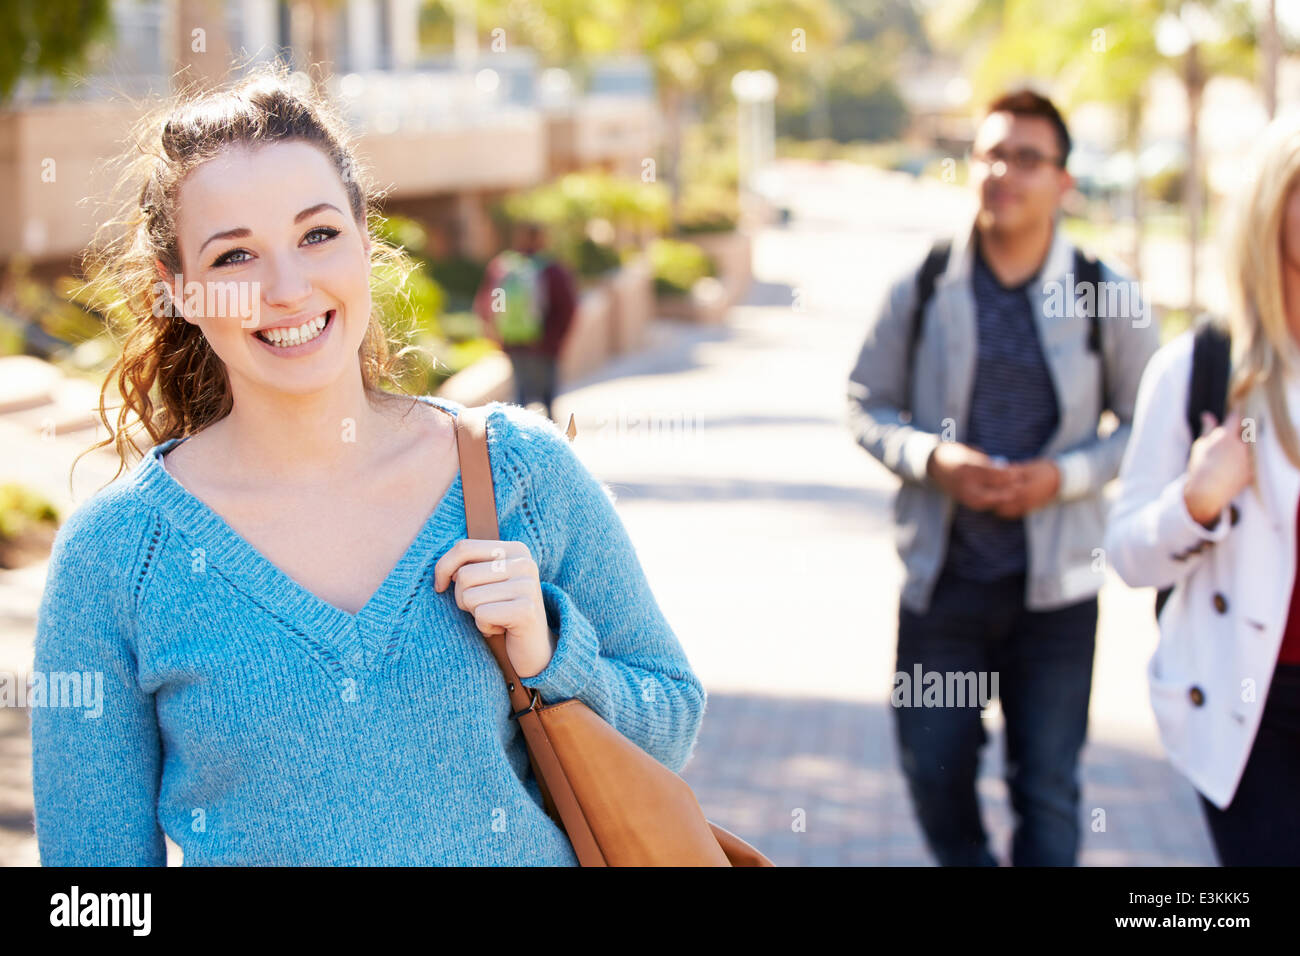 Portrait Of Female University Student Outdoors On Campus Stock Photo